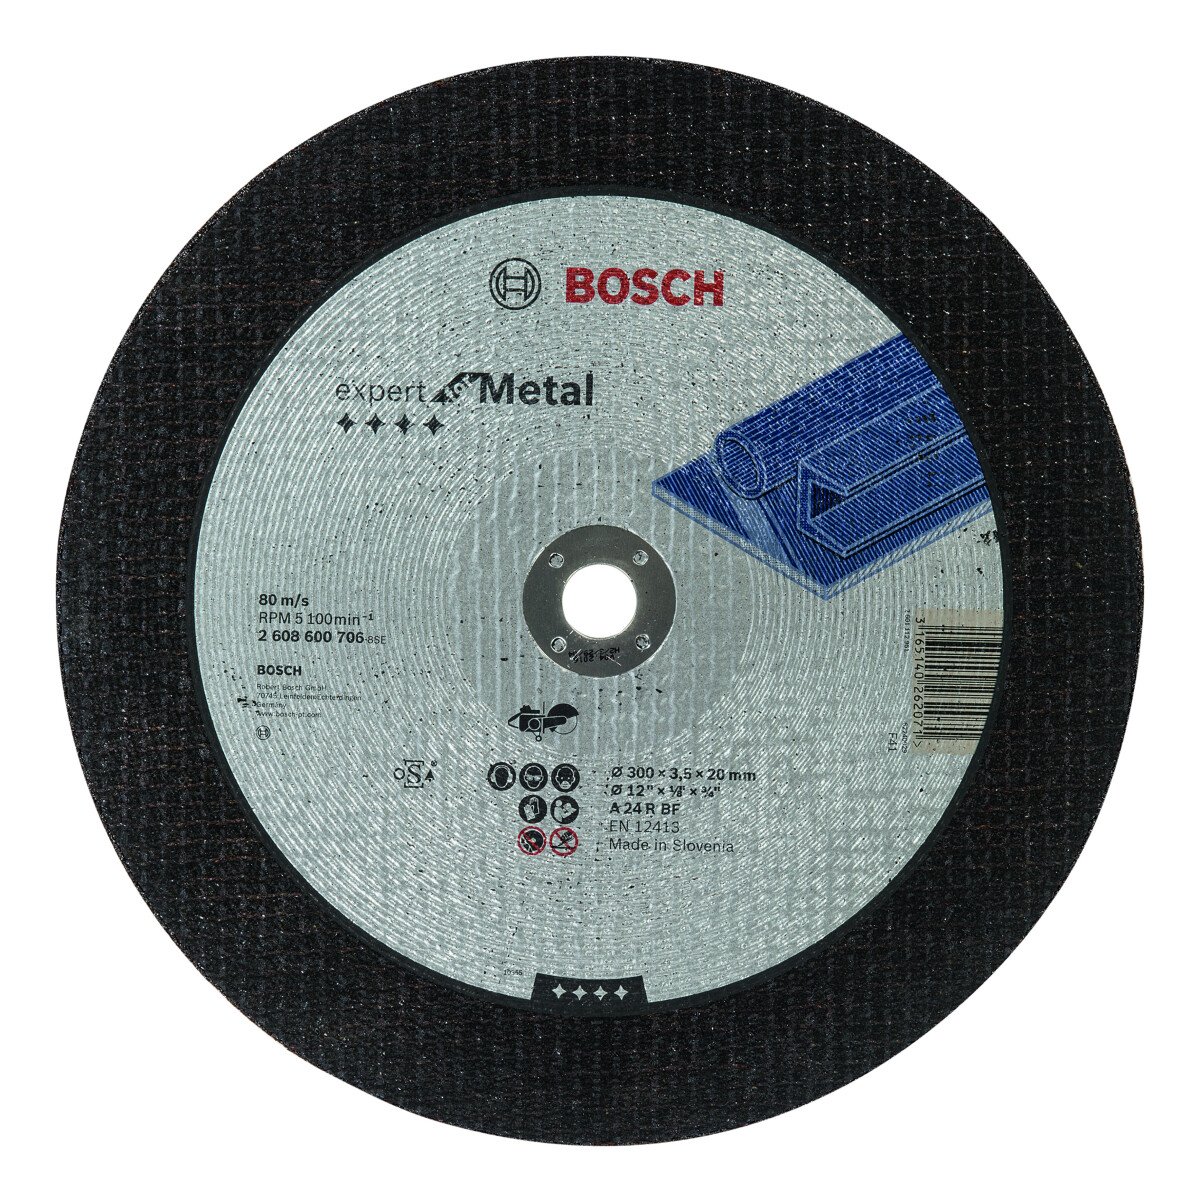 Bosch 2608600706 (Pack of 1) 300mm Metal Cutting discs - flat. 300x3.5x20mm